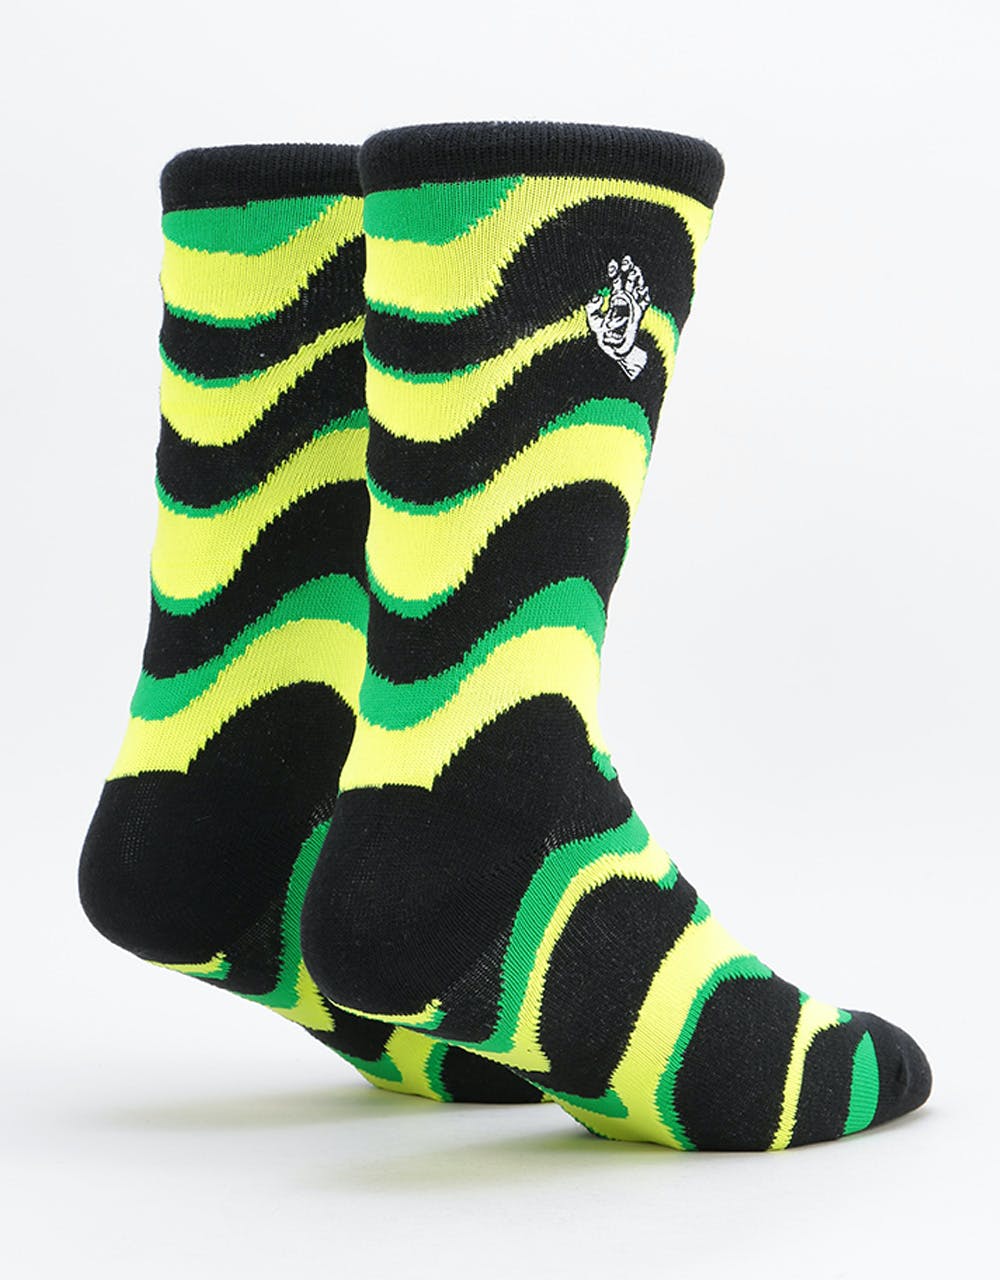 Santa Cruz Kaleido Hand Socks - Lime/Black